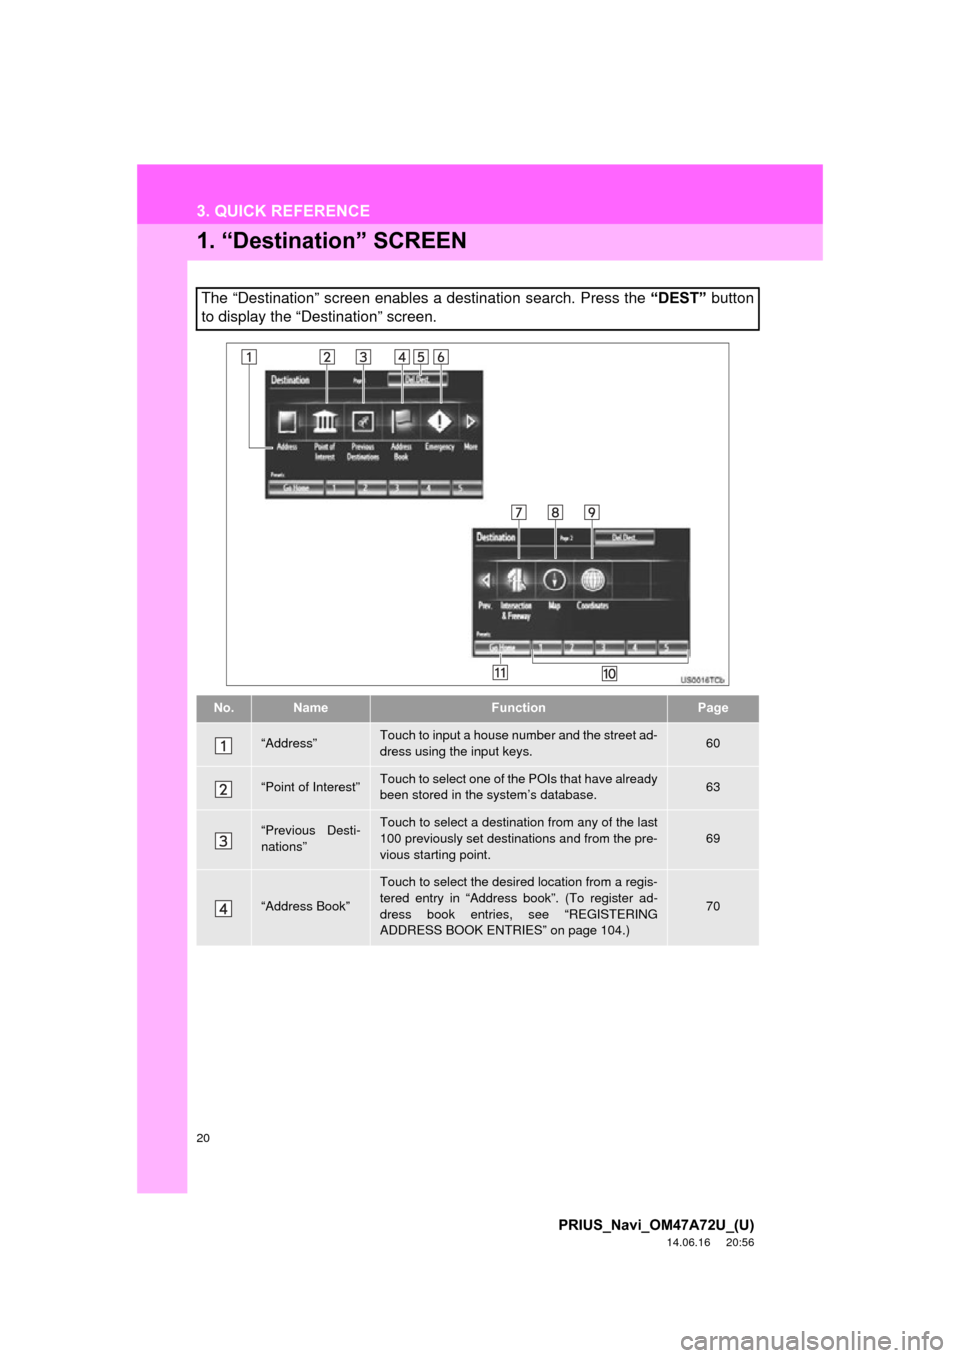 TOYOTA PRIUS 2015 4.G Navigation Manual 20
PRIUS_Navi_OM47A72U_(U)
14.06.16     20:56
3. QUICK REFERENCE
1. “Destination” SCREEN
The “Destination” screen enables a destination search. Press the “DEST” button
to display the “De